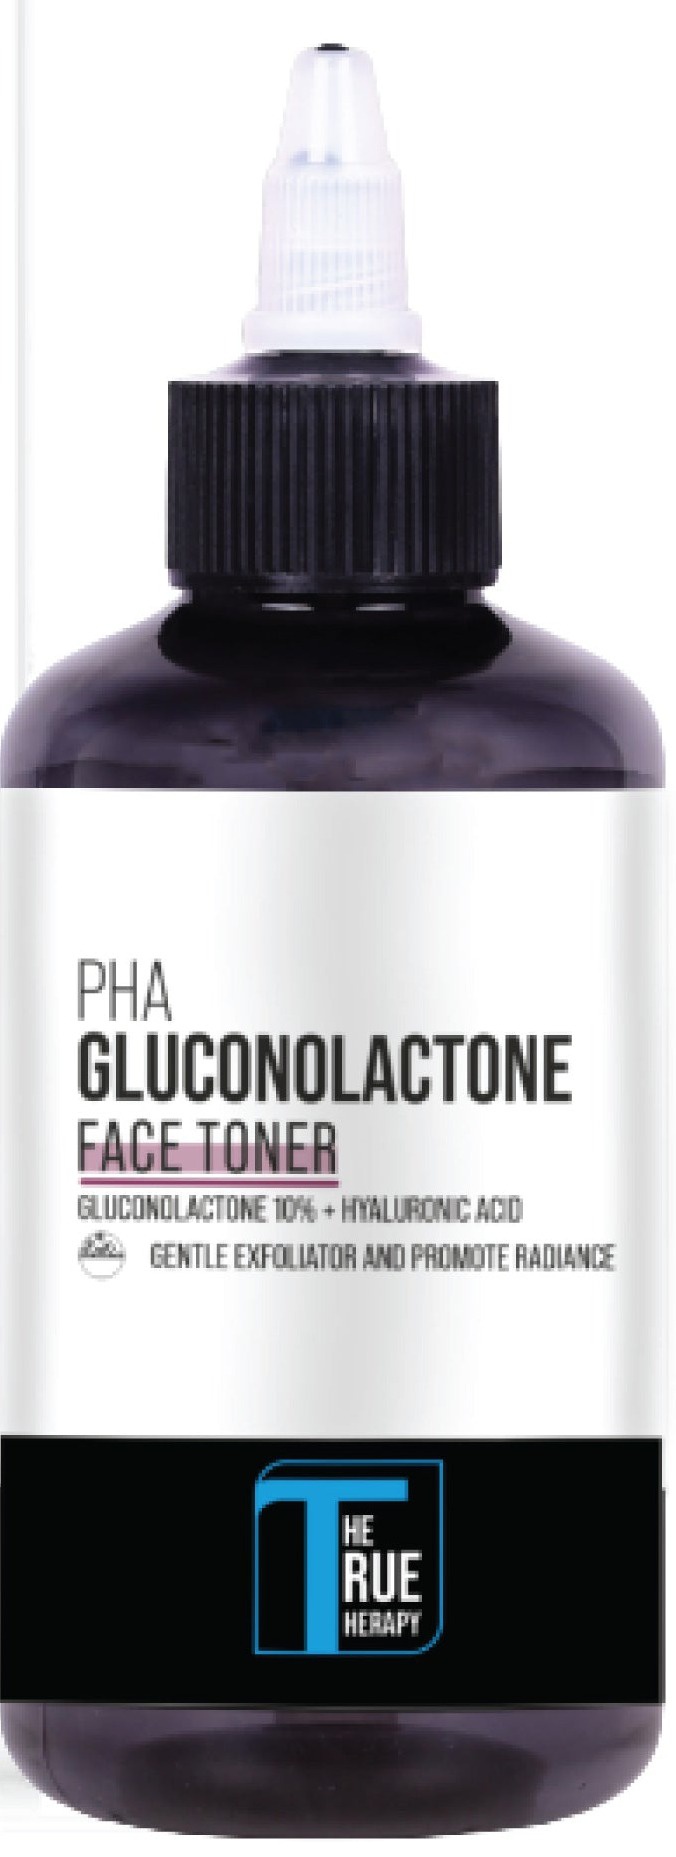 The True Therapy PHA Gluconolactone 10% Toner